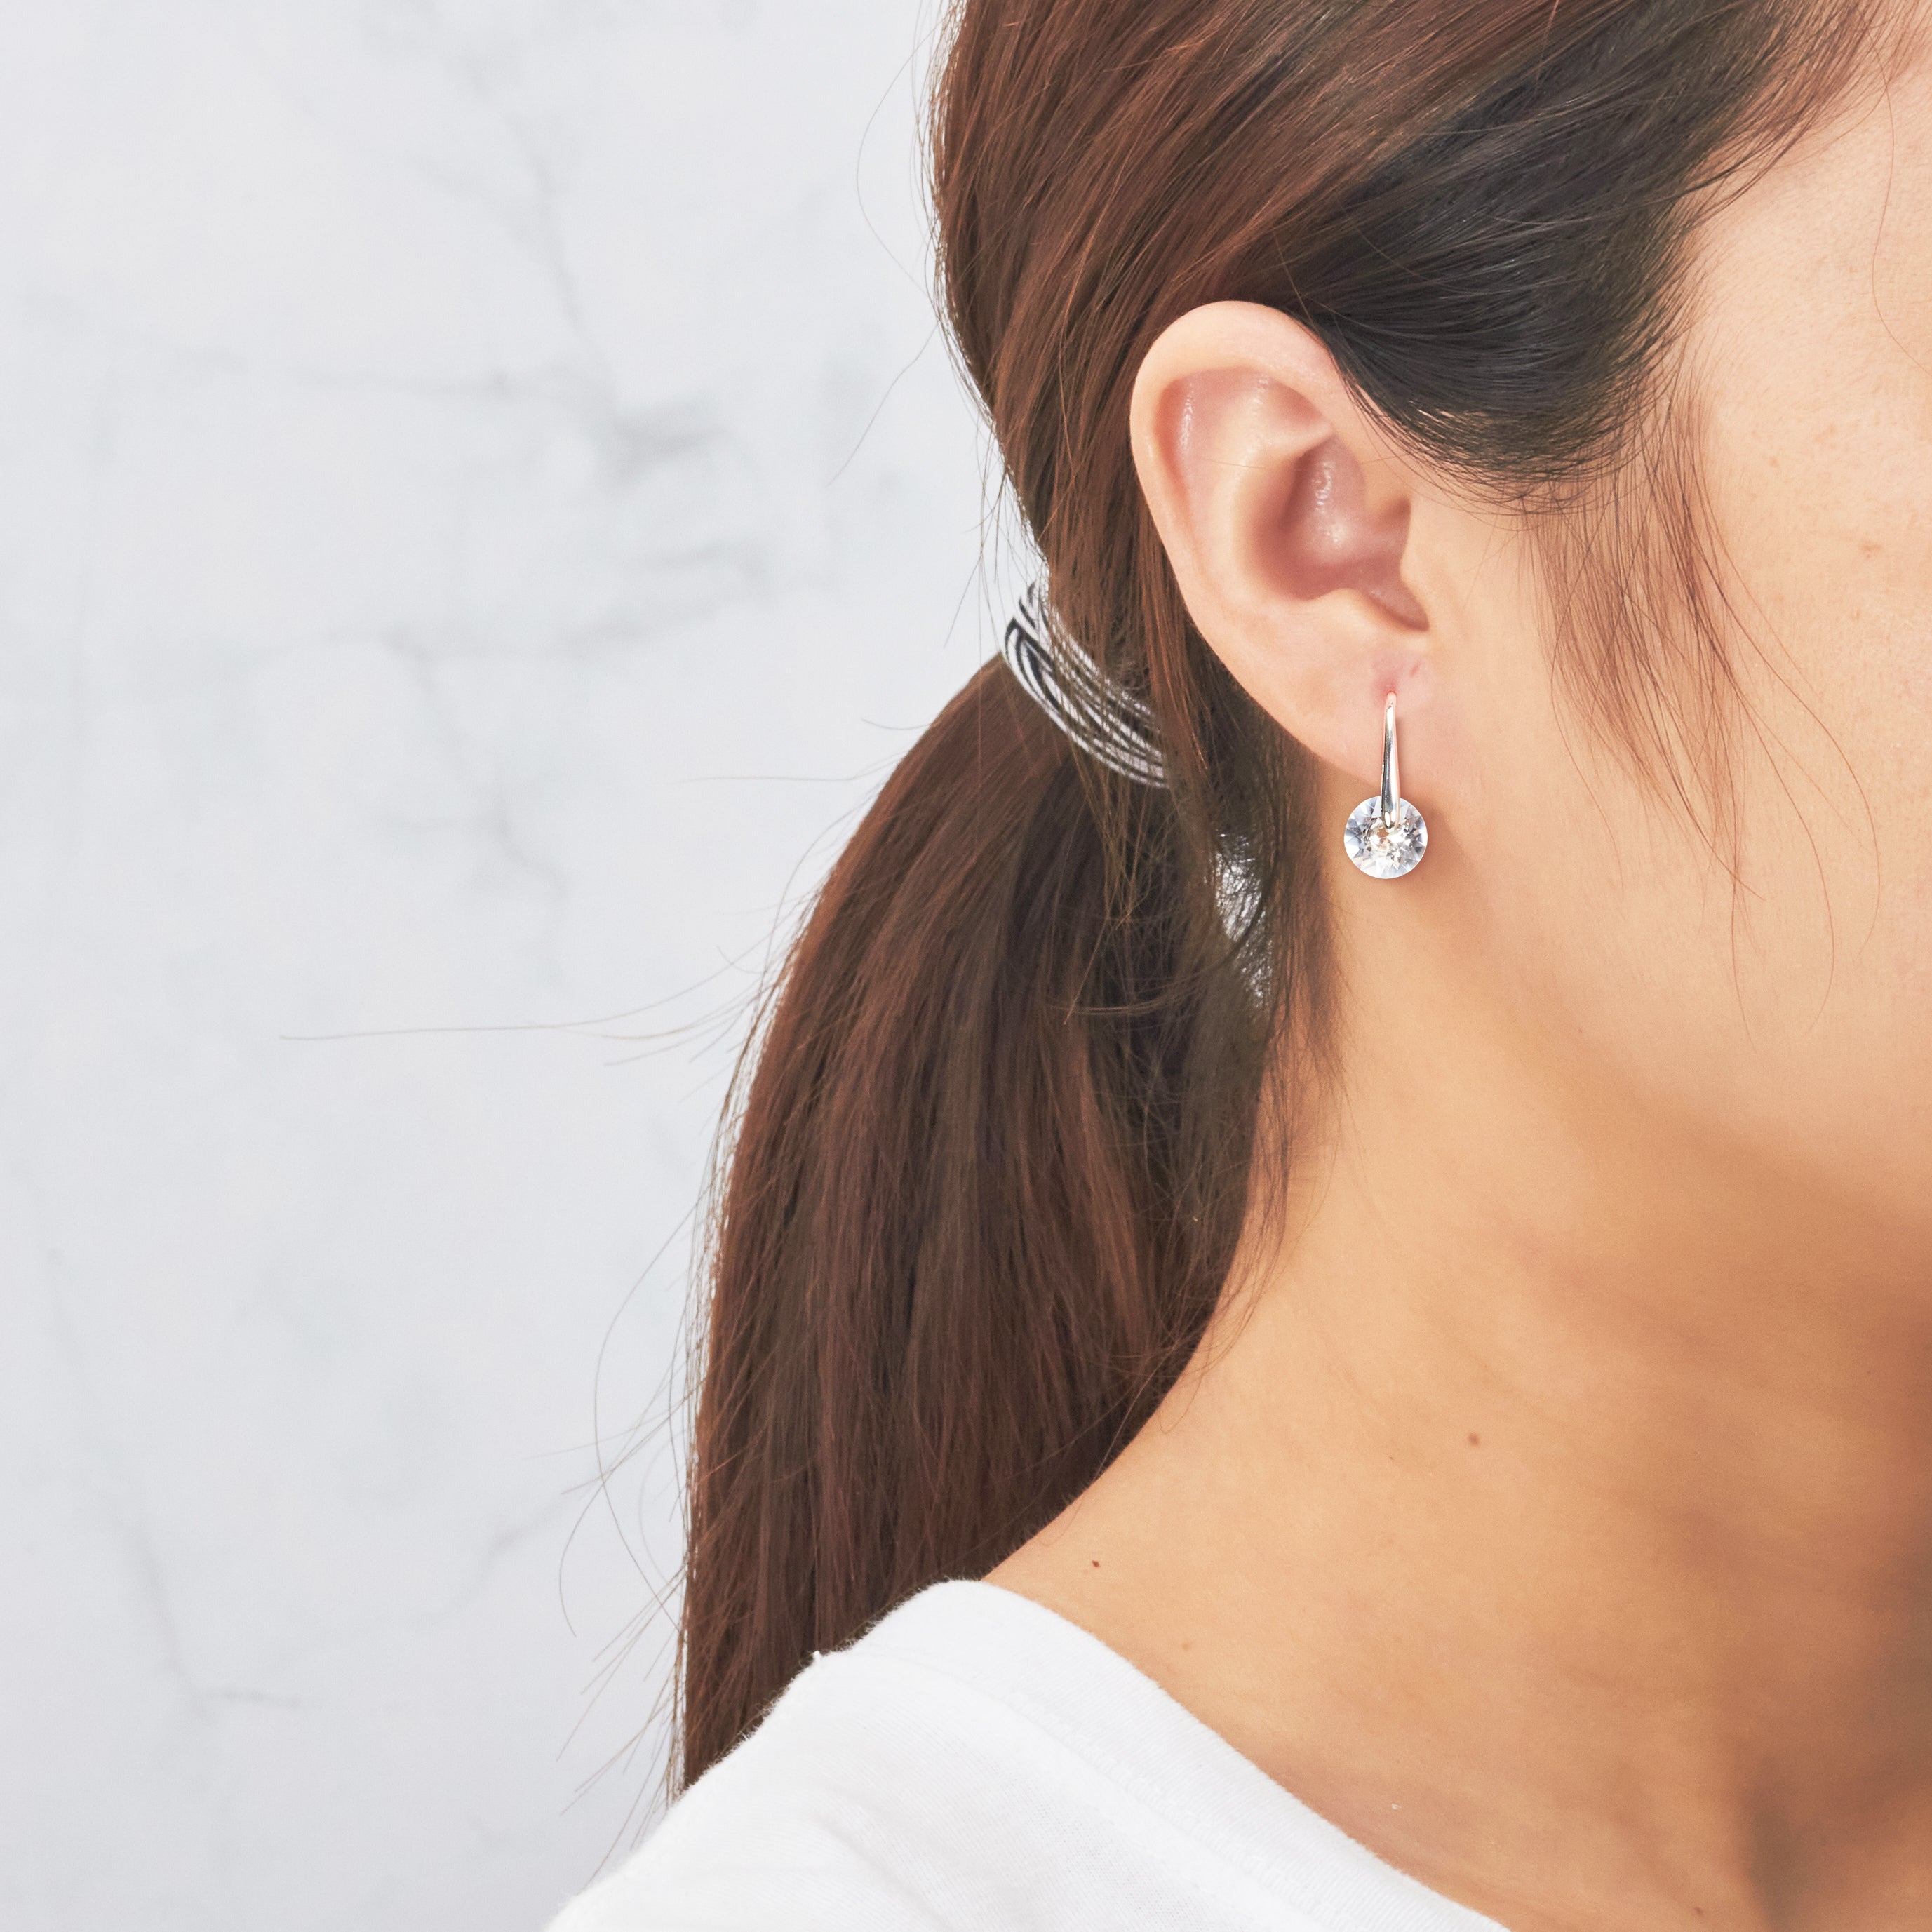 Atlas Earrings Created with Zircondia® Crystals